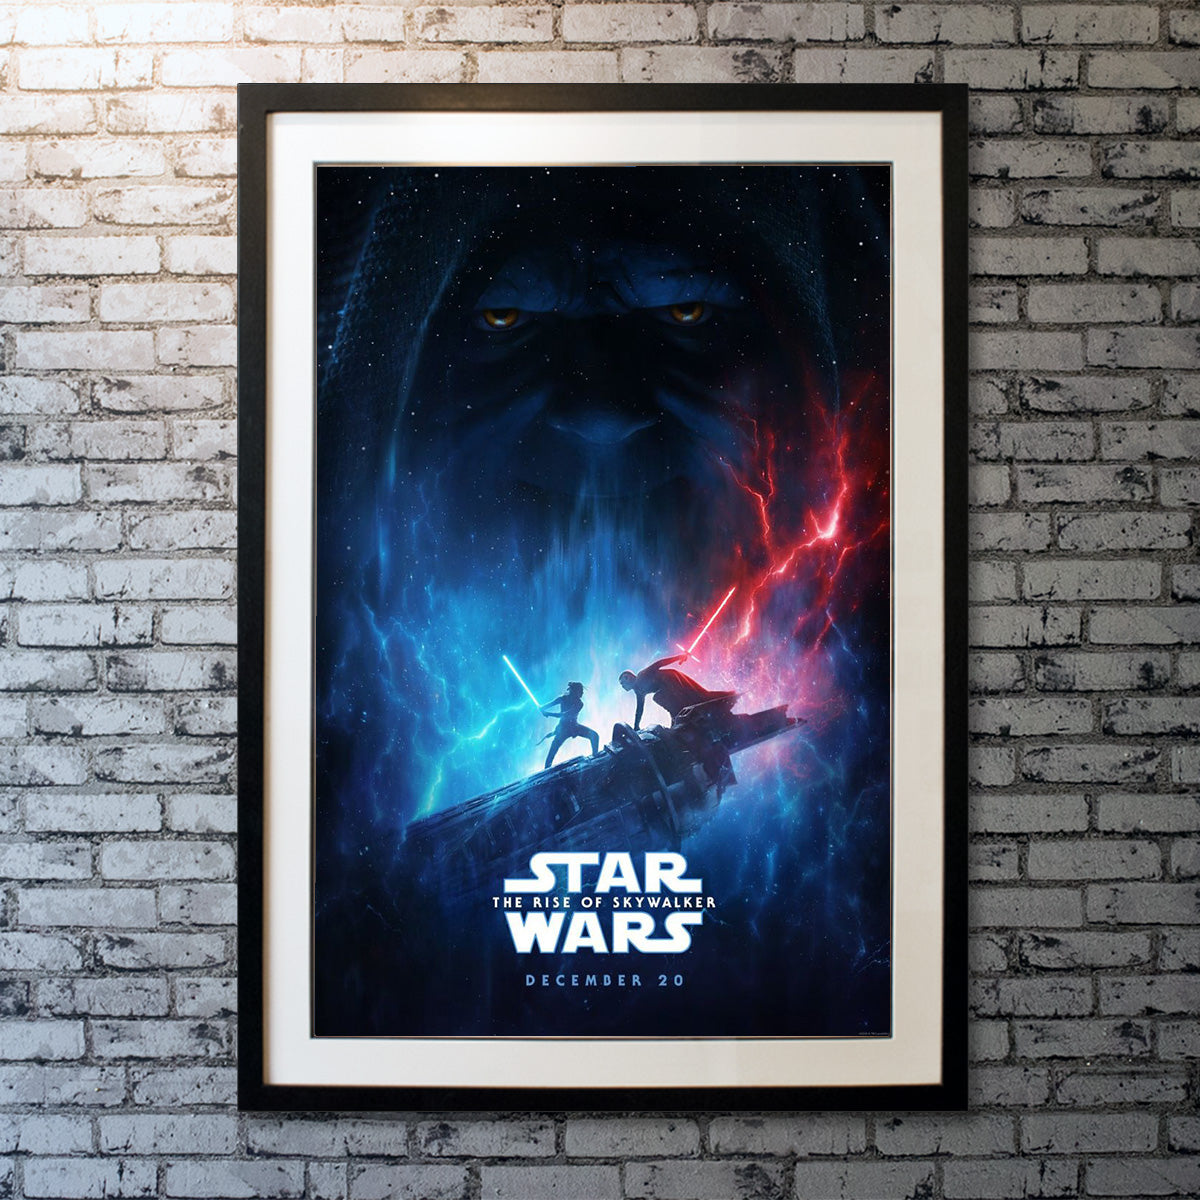 Original Movie Poster of Star Wars: The Rise Of Skywalker (2019)